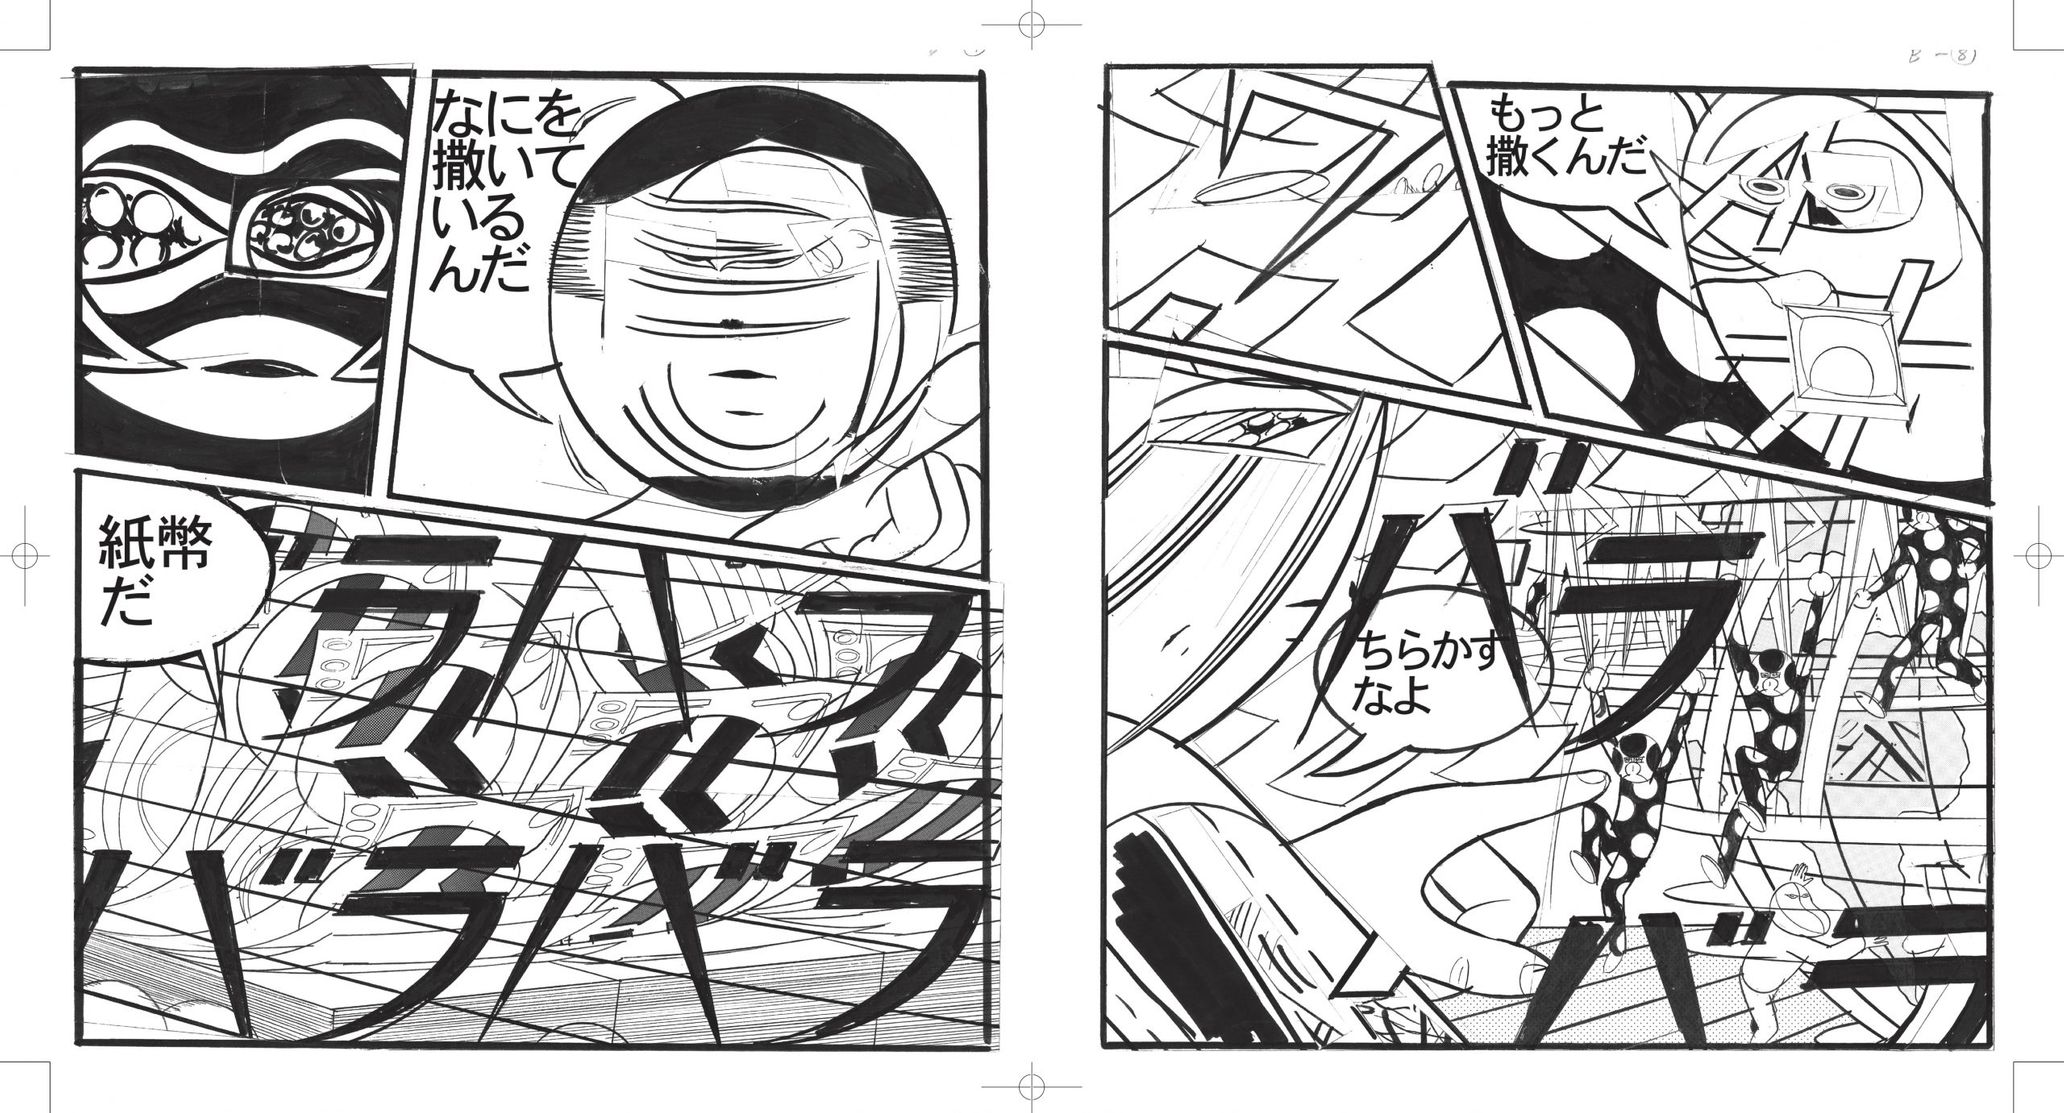 Yuichi Yokoyama's “Neo Manga” And His Relationship With 